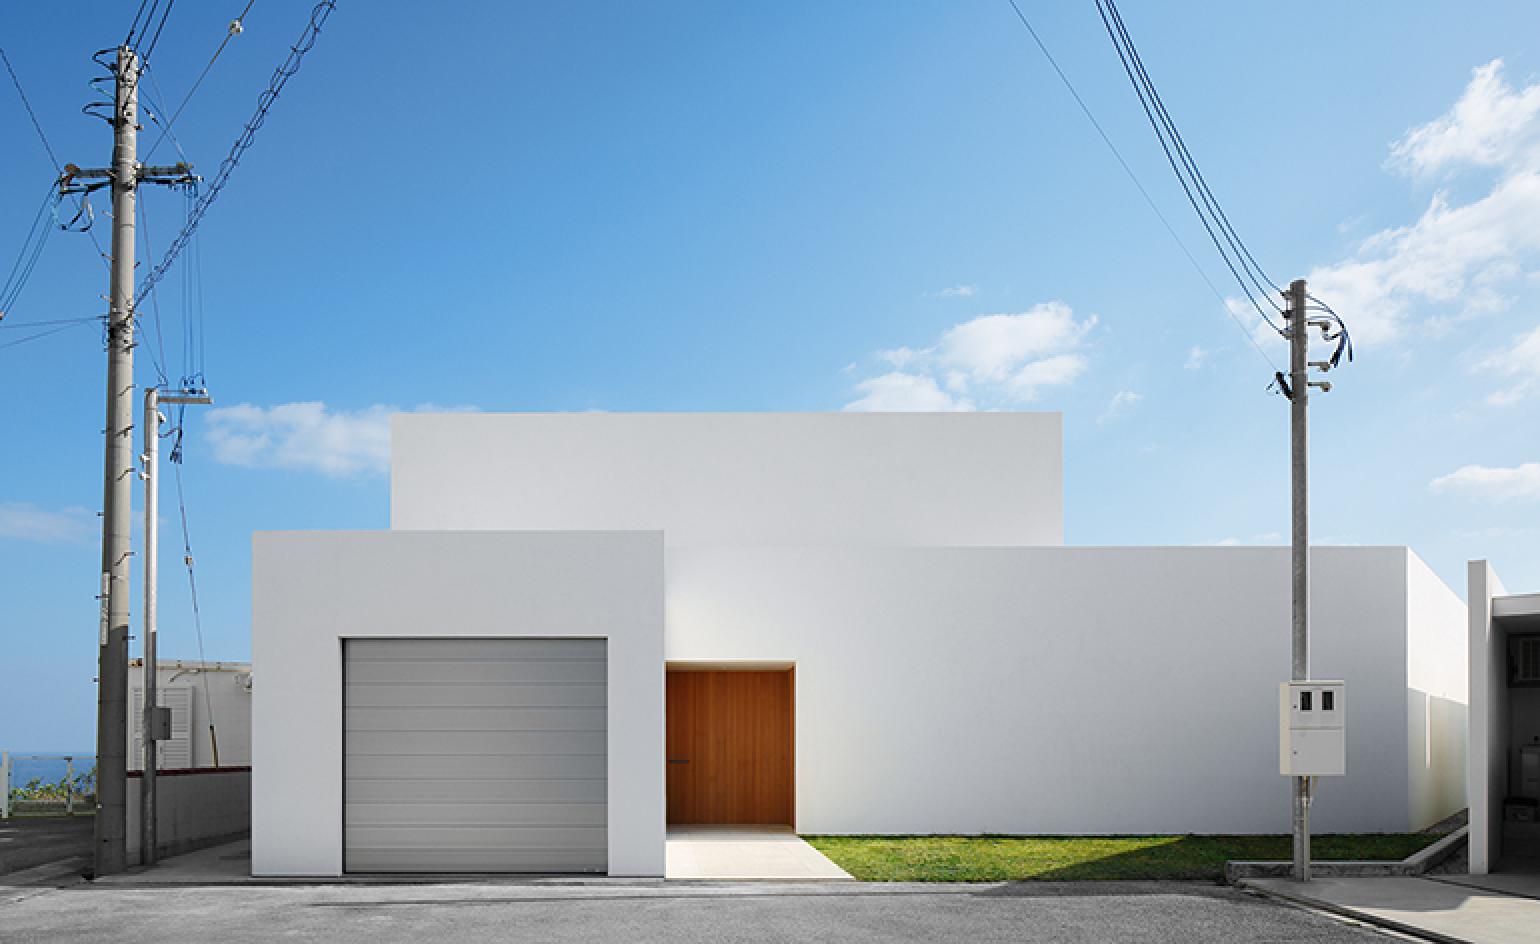 minimalist architecture wallpaper,architecture,house,building,sky,overhead power line